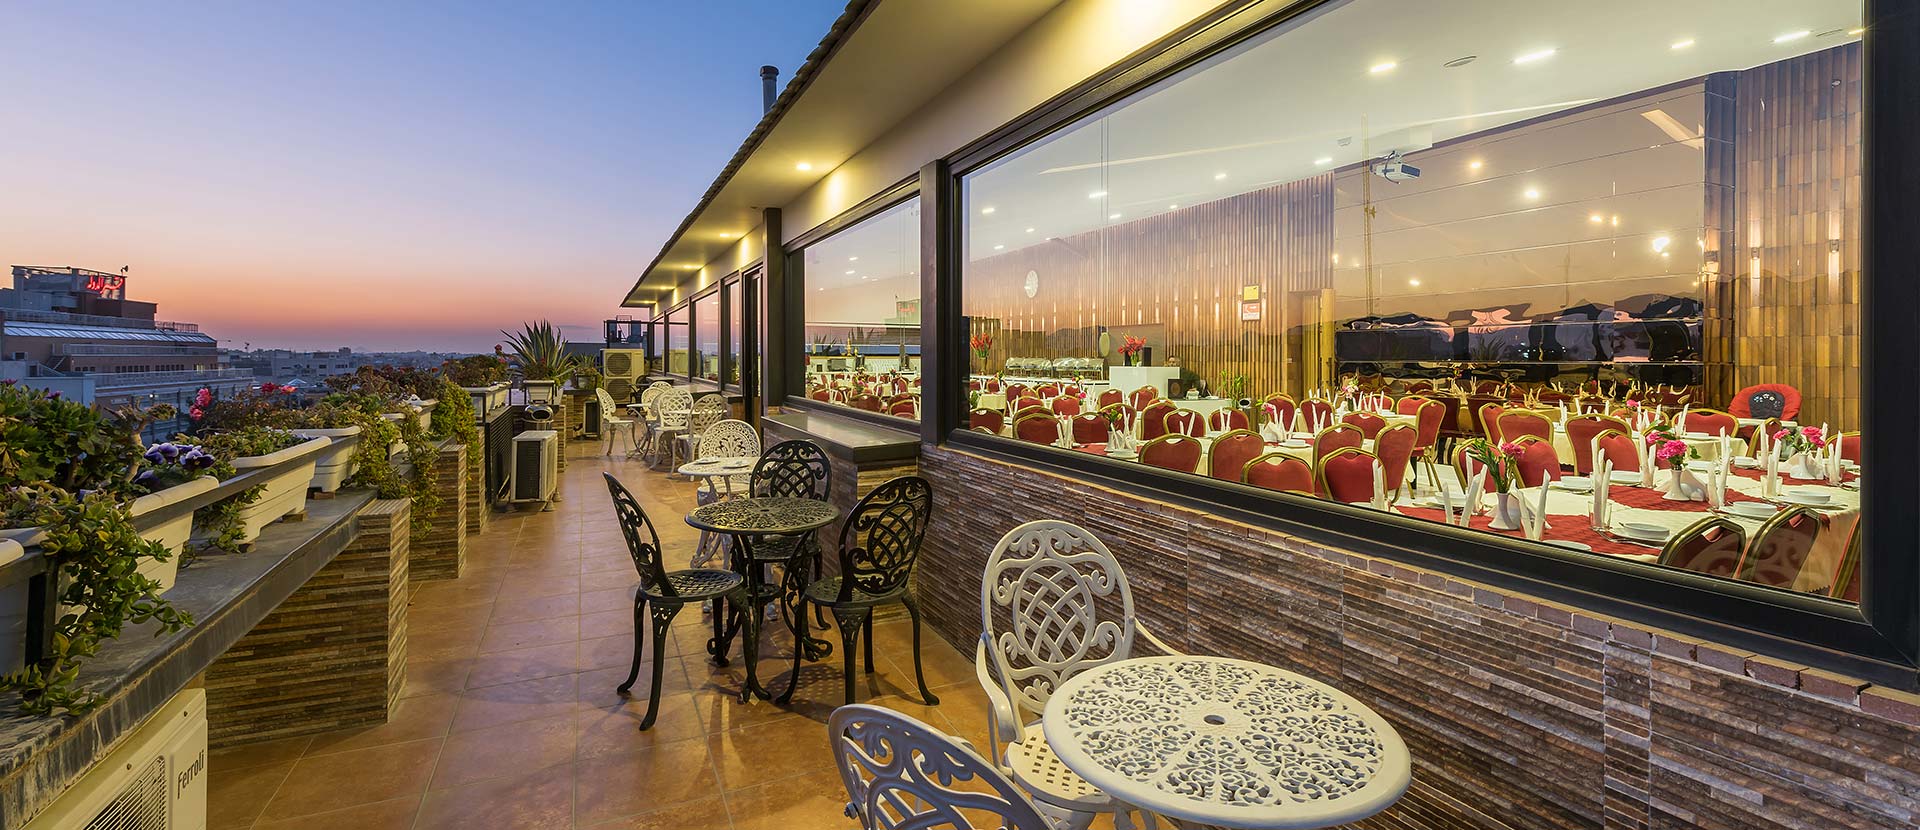 Sheykh Bahaei Hotel, Rooftop Restaurant